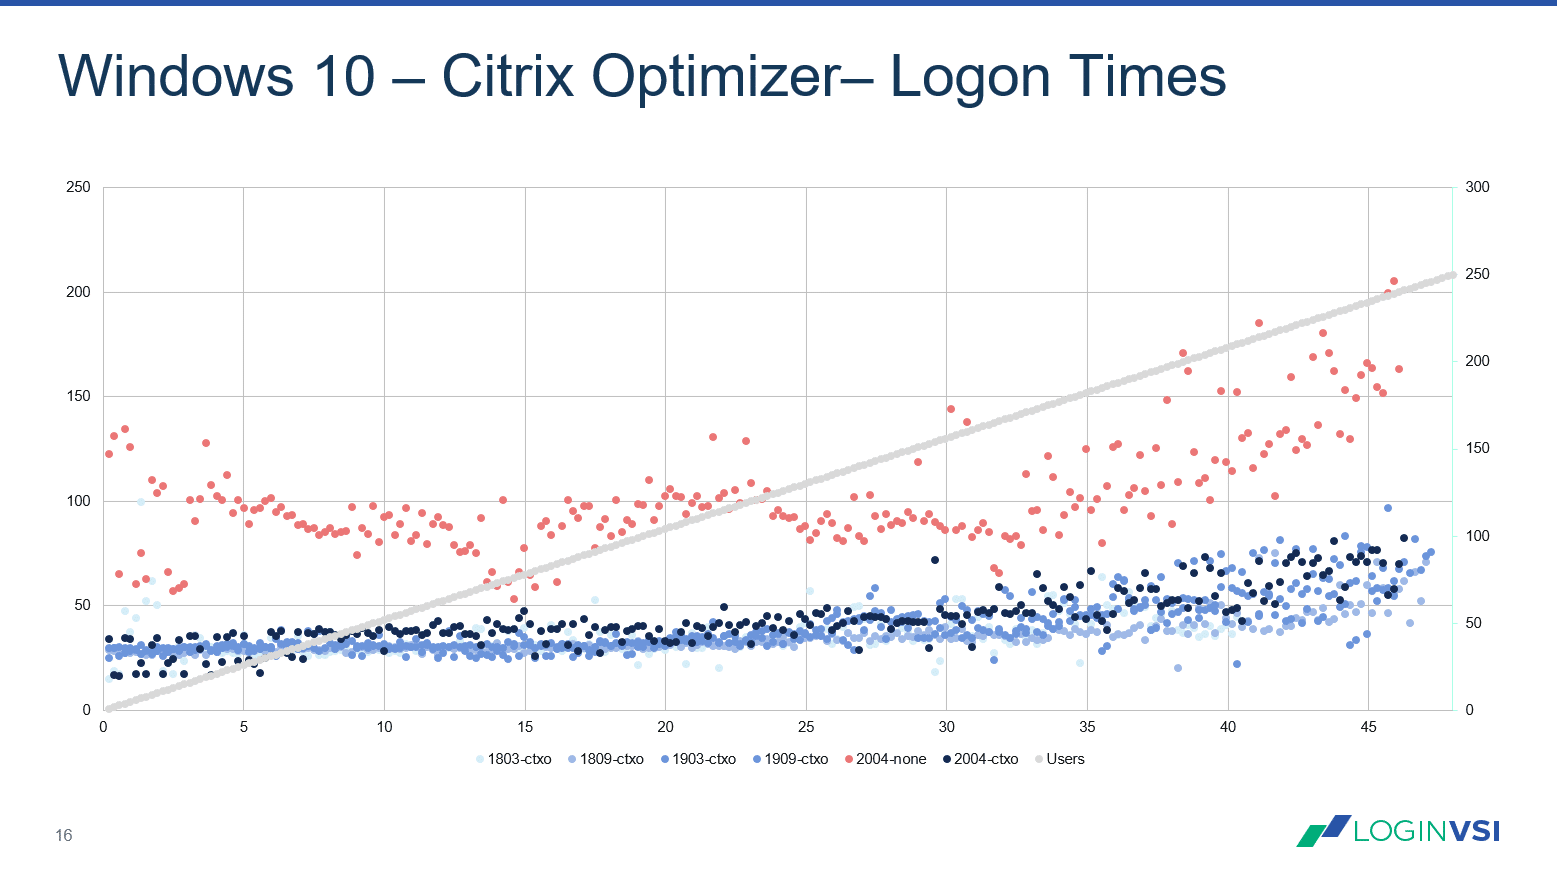 Login VSI Blog - Windows 10 – 2004 – Benchmark - Optimized with Citrix Optimizer - Image 6: User Logon times (Lower is better)